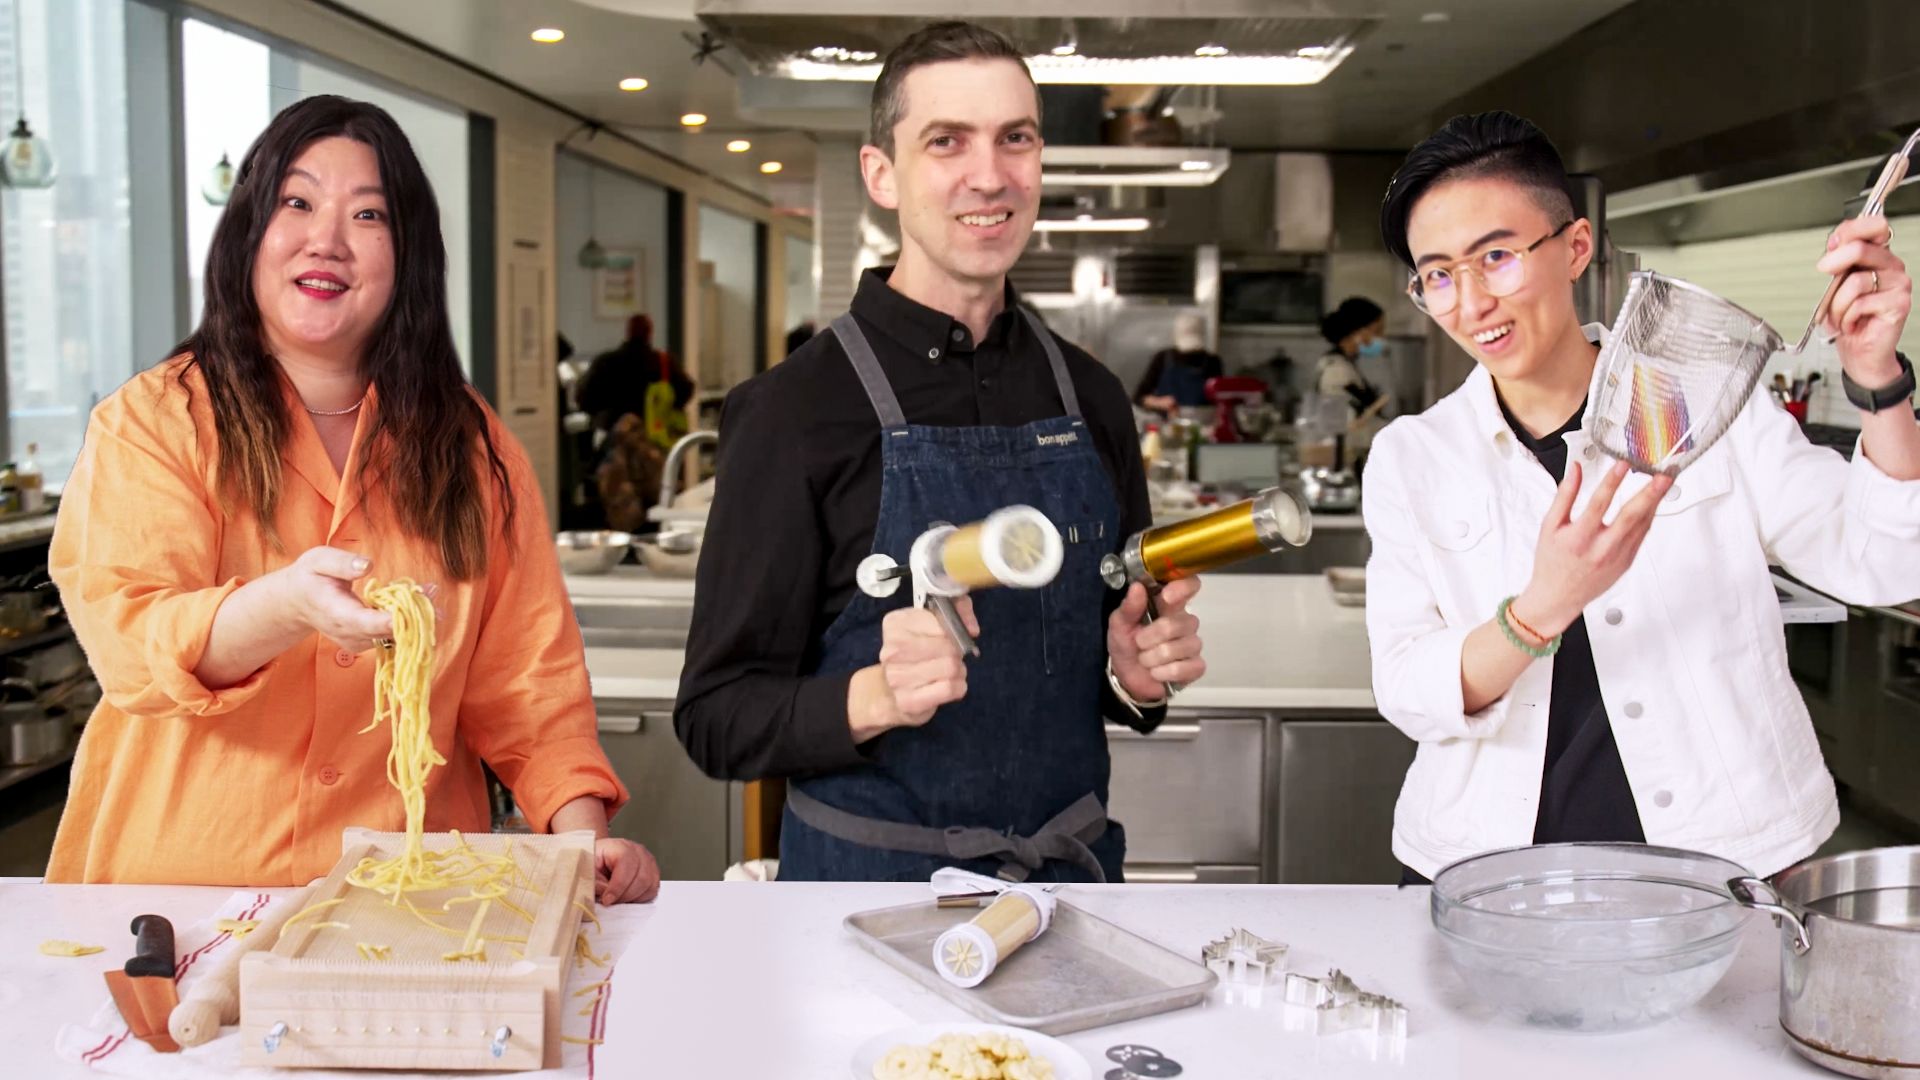 Watch 6 Pro Chefs Reveal Their Secret Weapon Tools, Test Kitchen Talks